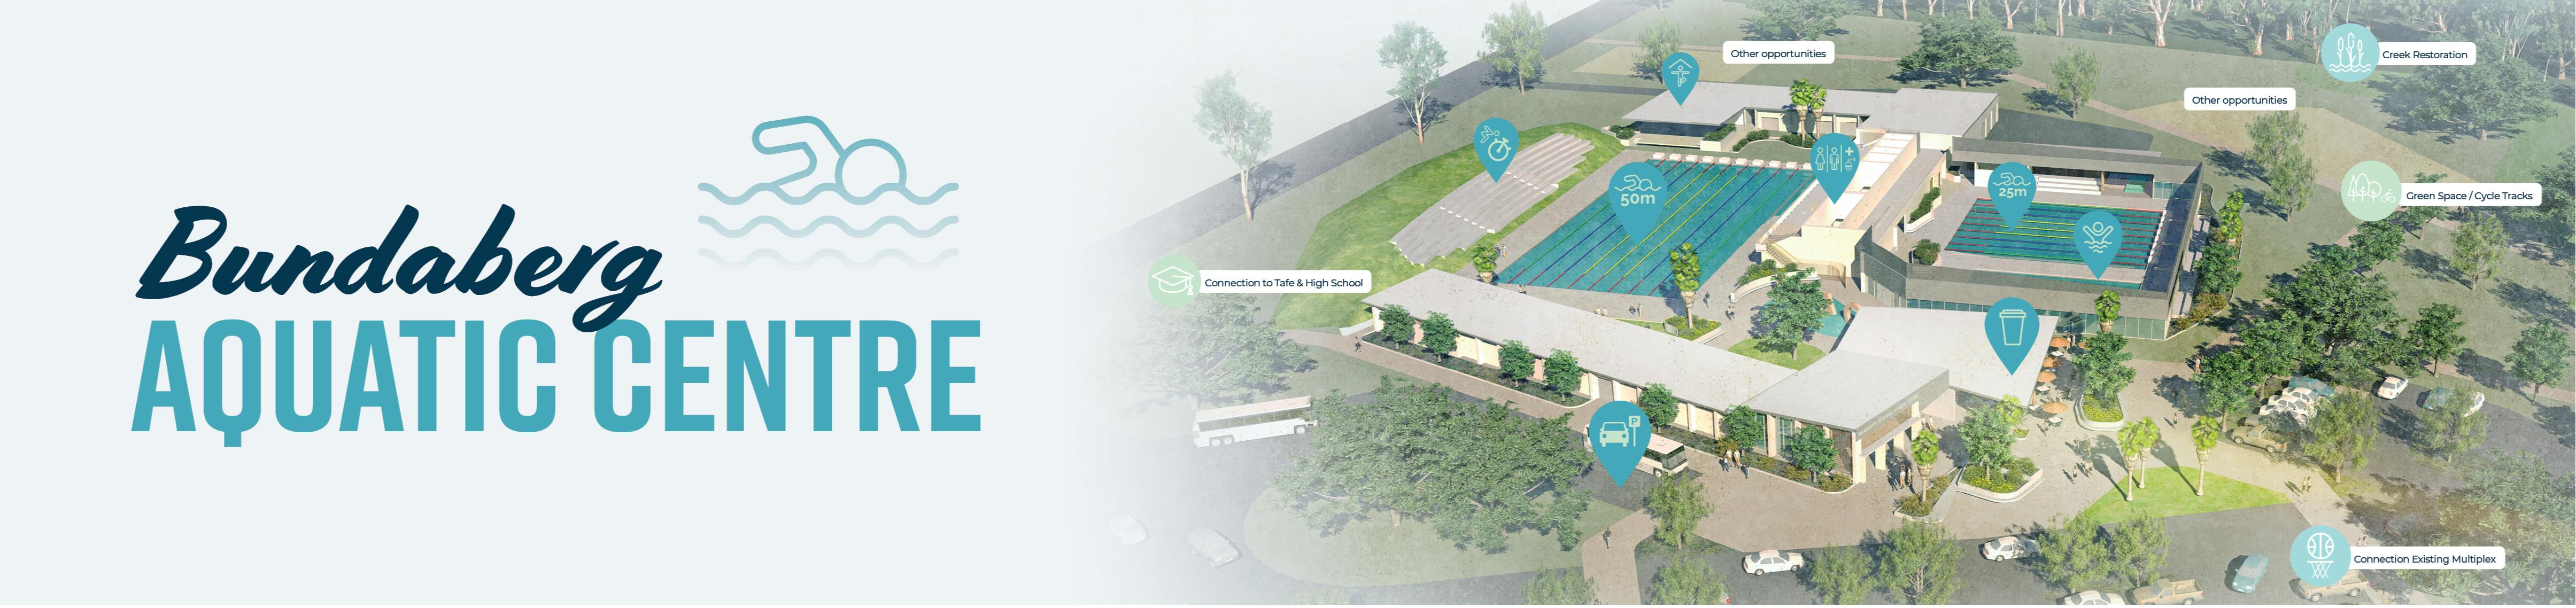 An artist's impression of the new Bundaberg Aquatic Facility